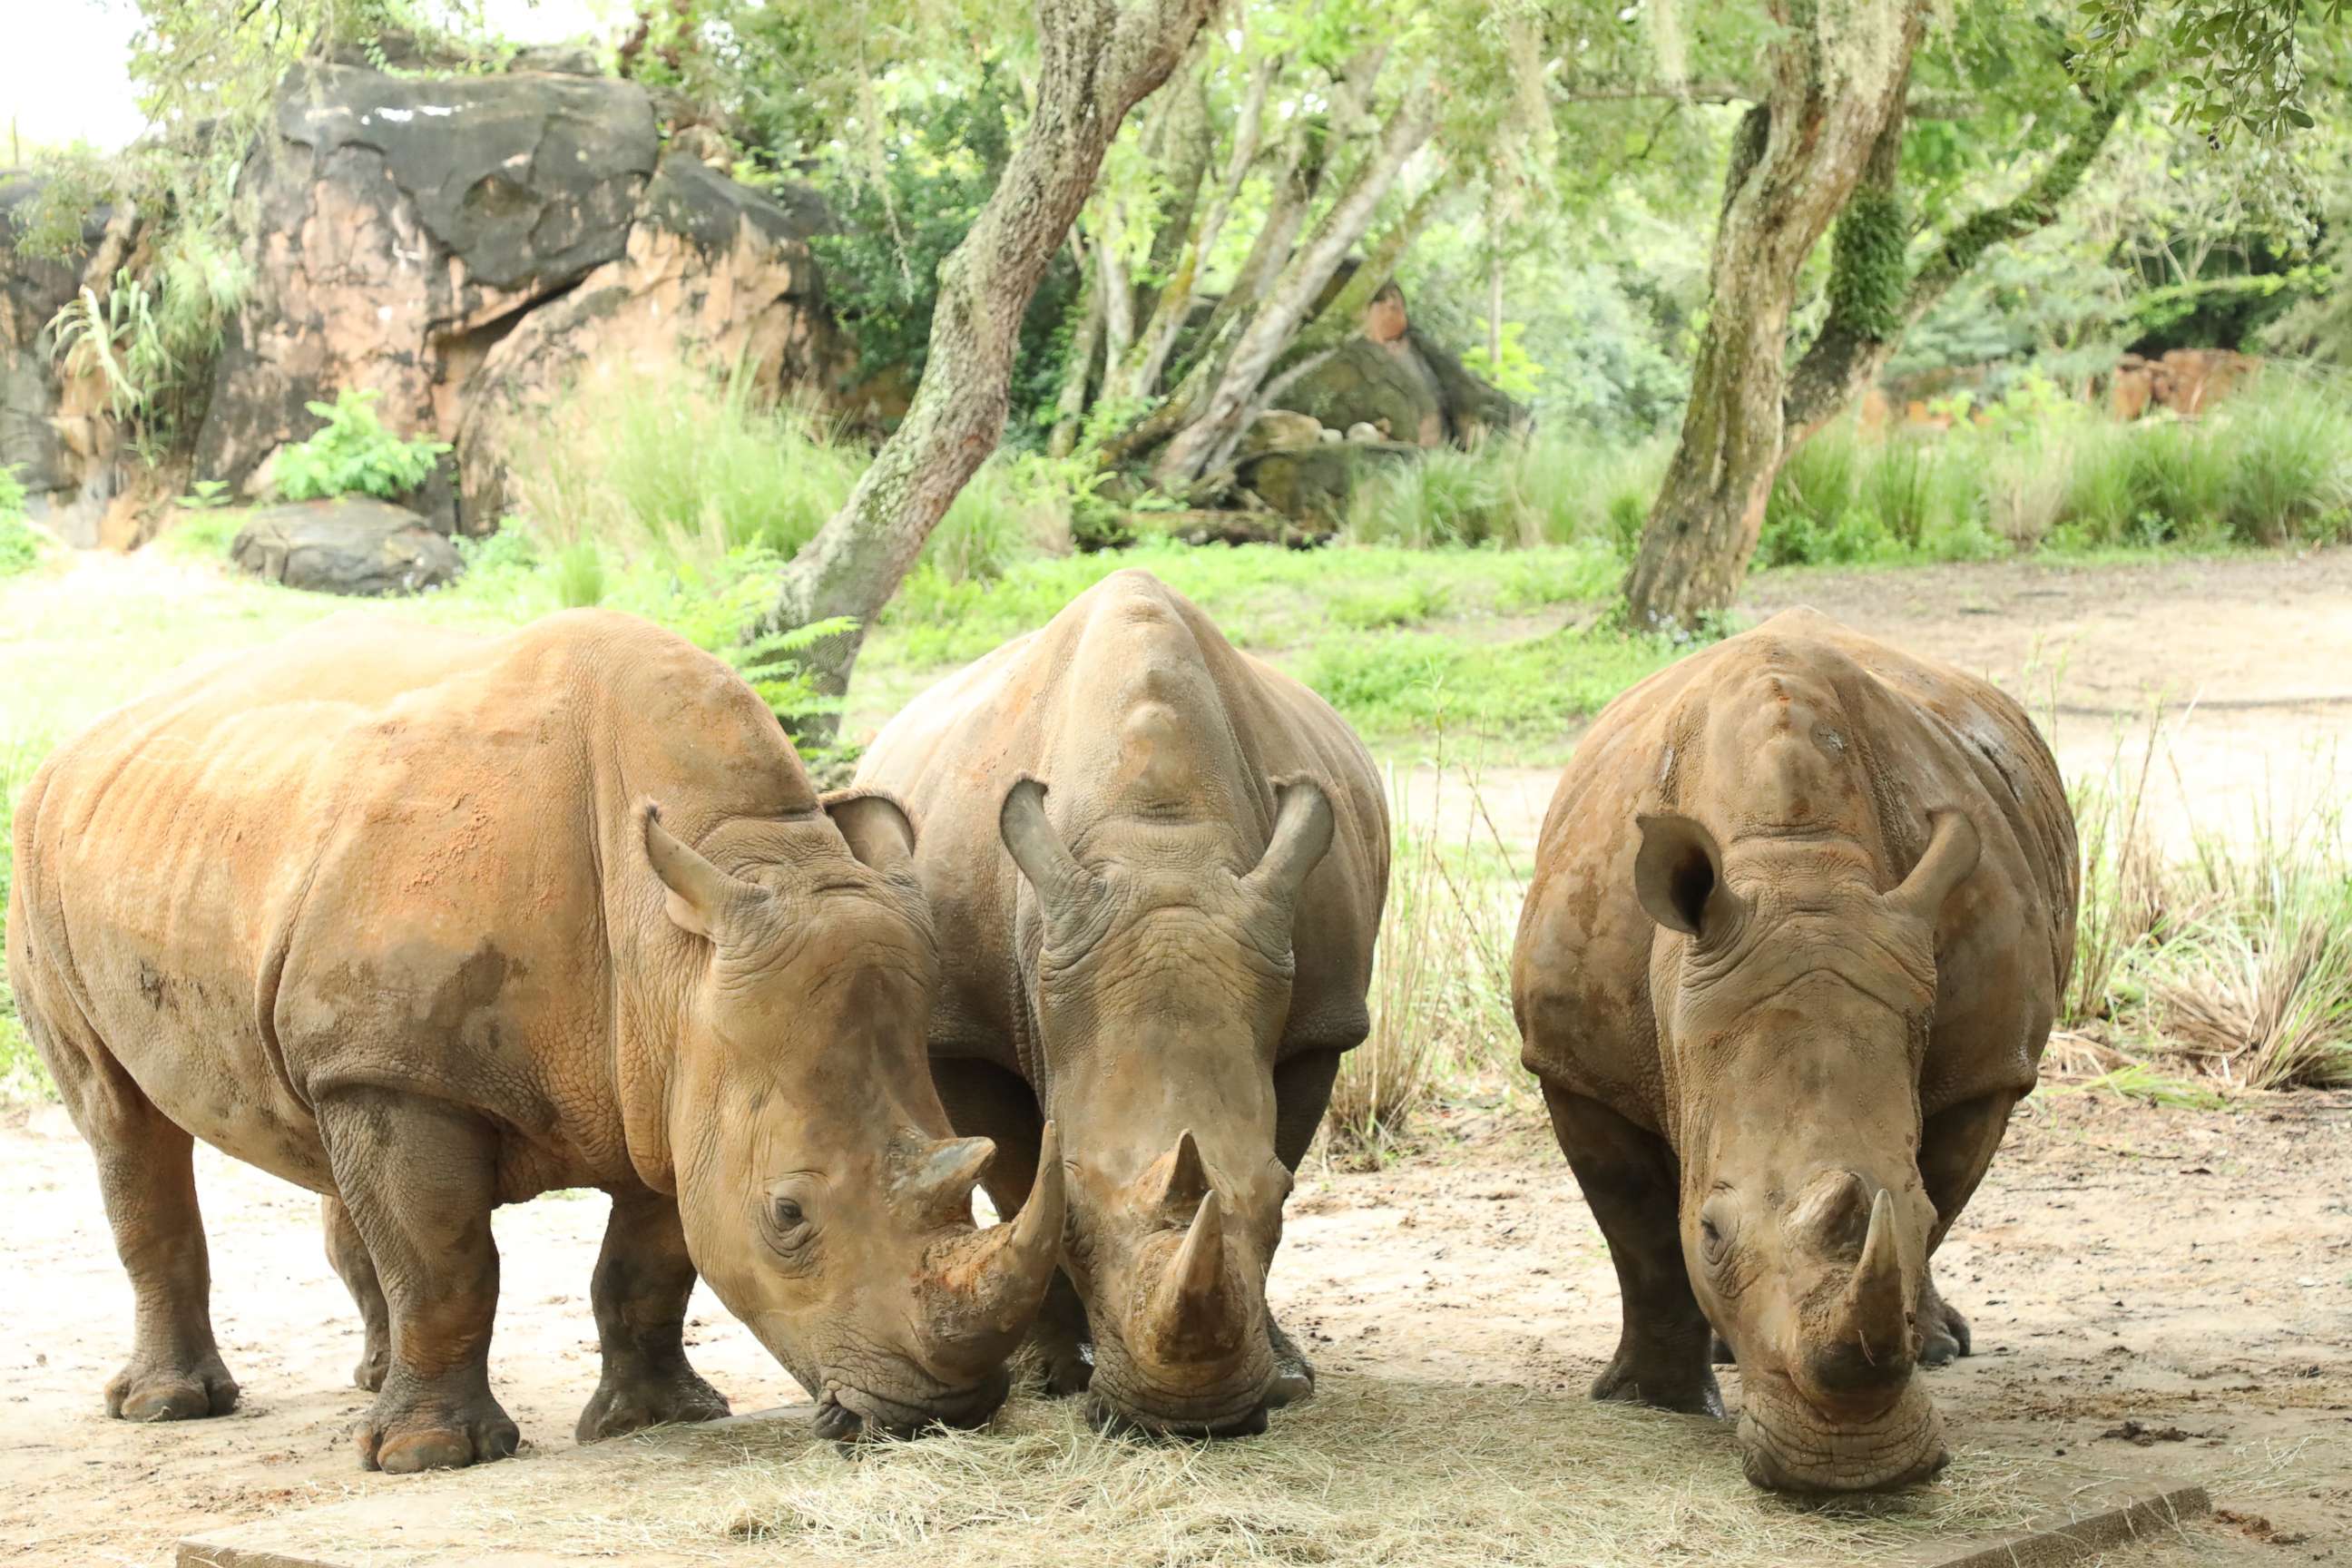 PHOTO: On World Rhino Day, Sept. 22, 2020, Disney’s Animal Kingdom announced the pregnancies of three rhinos at the Walt Disney World Resort theme park. 